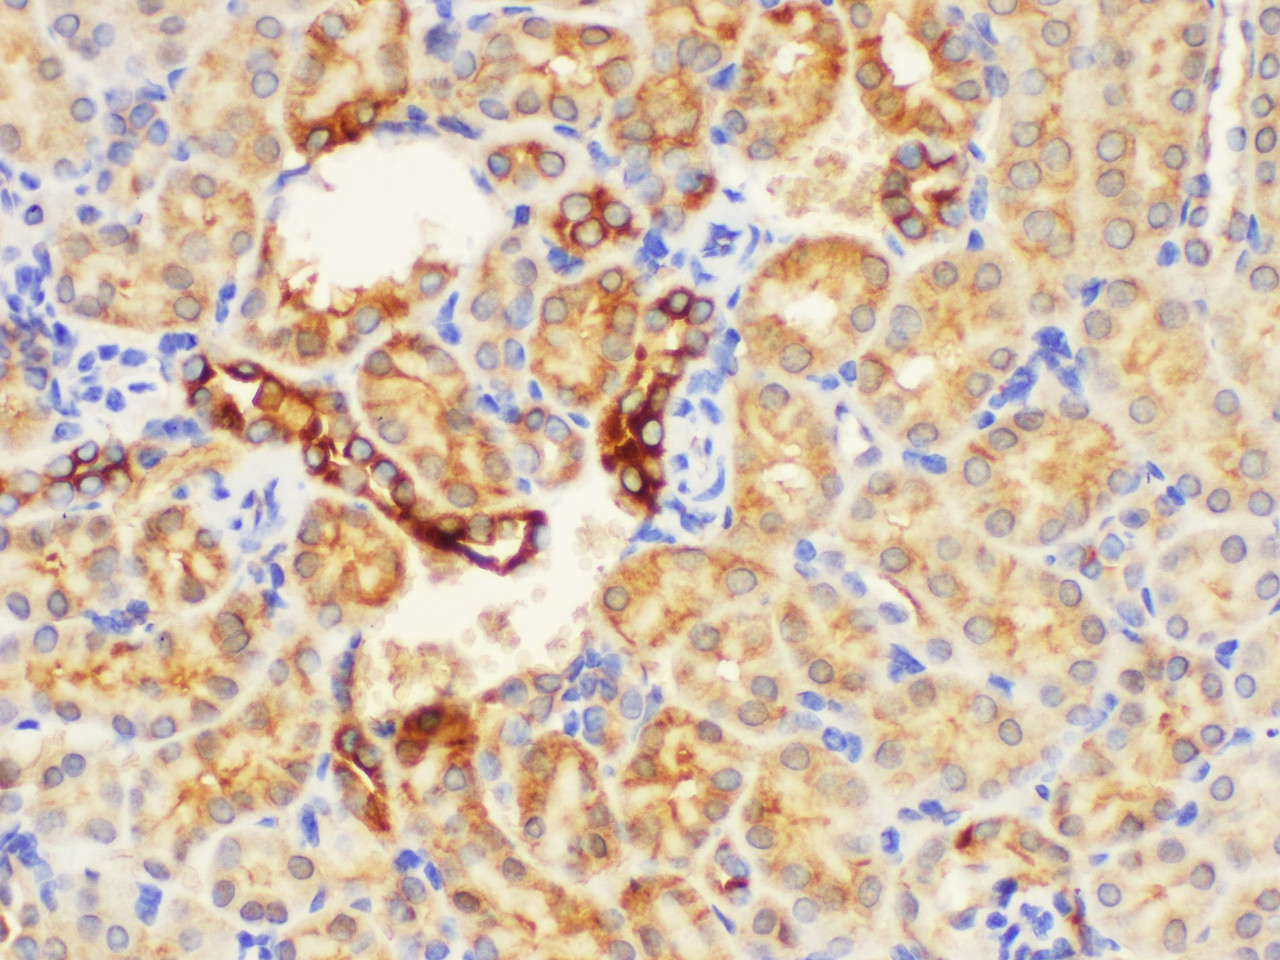 https://file.elabscience.com//image/antibody/EA/E-AB-40367-IHC03.jpg